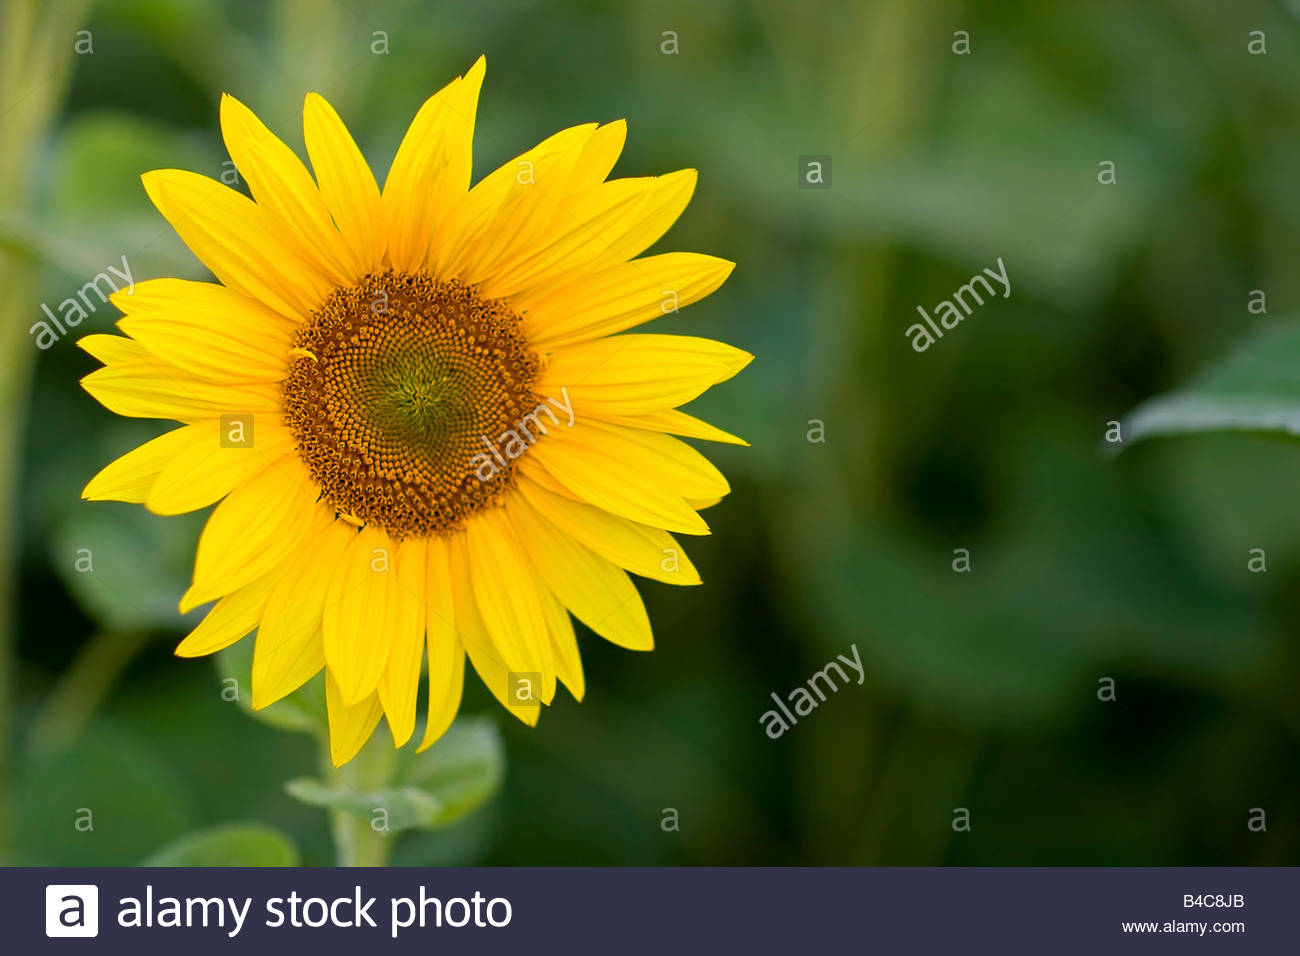 Single Sunflower Against Unfocused Background Stock Photos